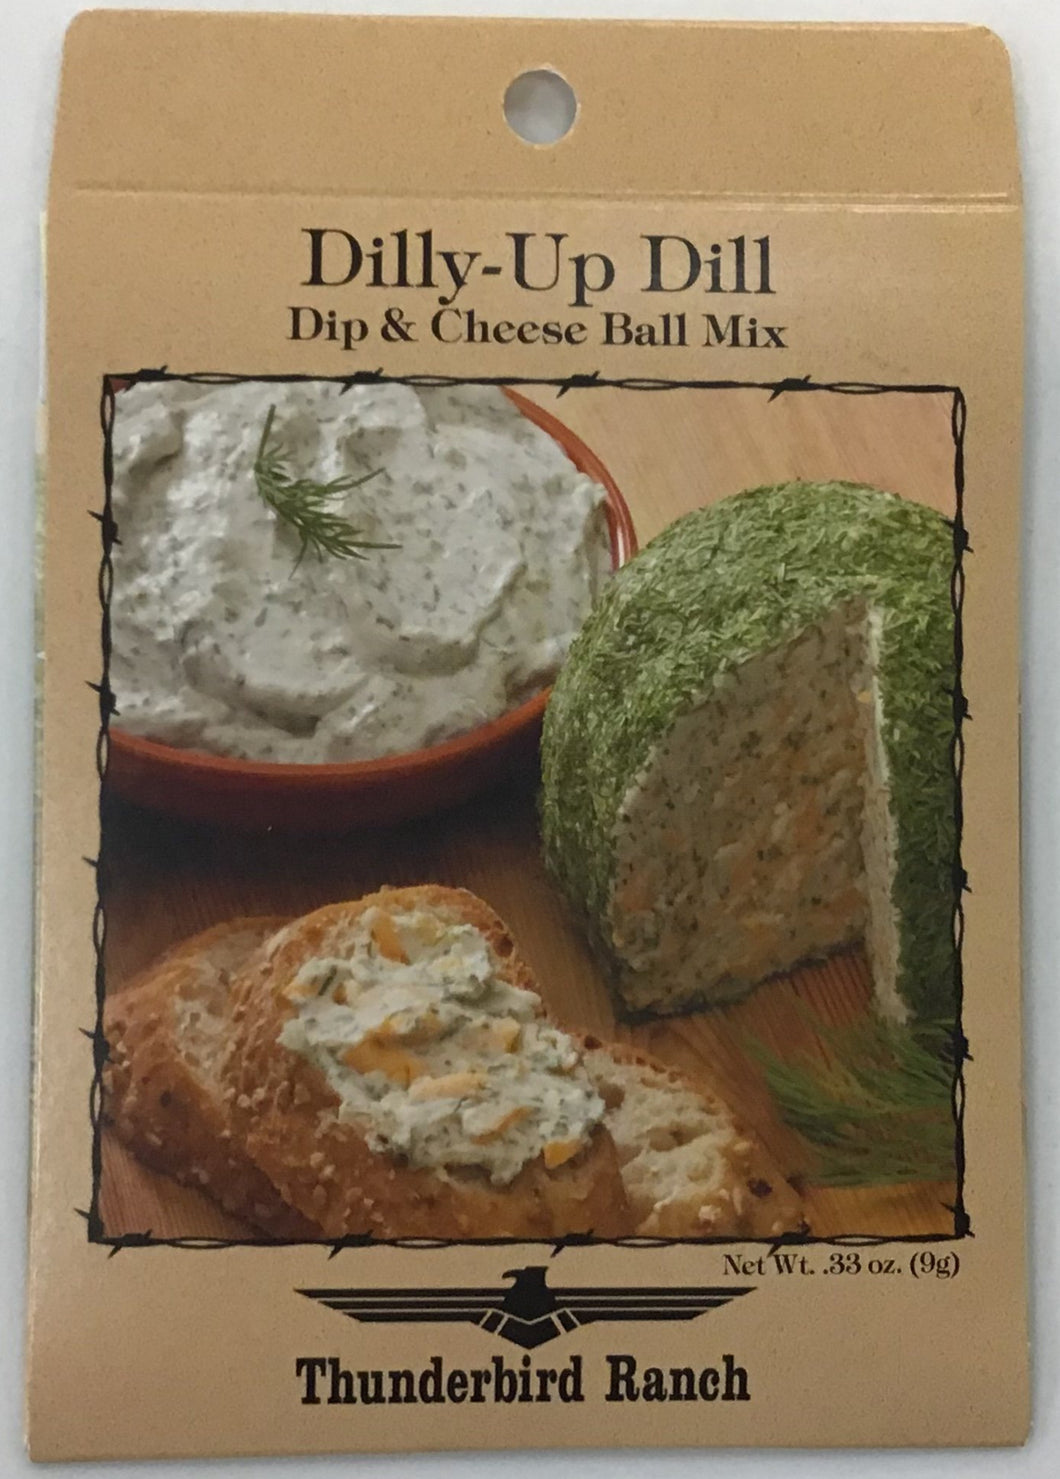 Dakota Seasonings Dilly-Up Dill Dip and Cheese Ball Mix